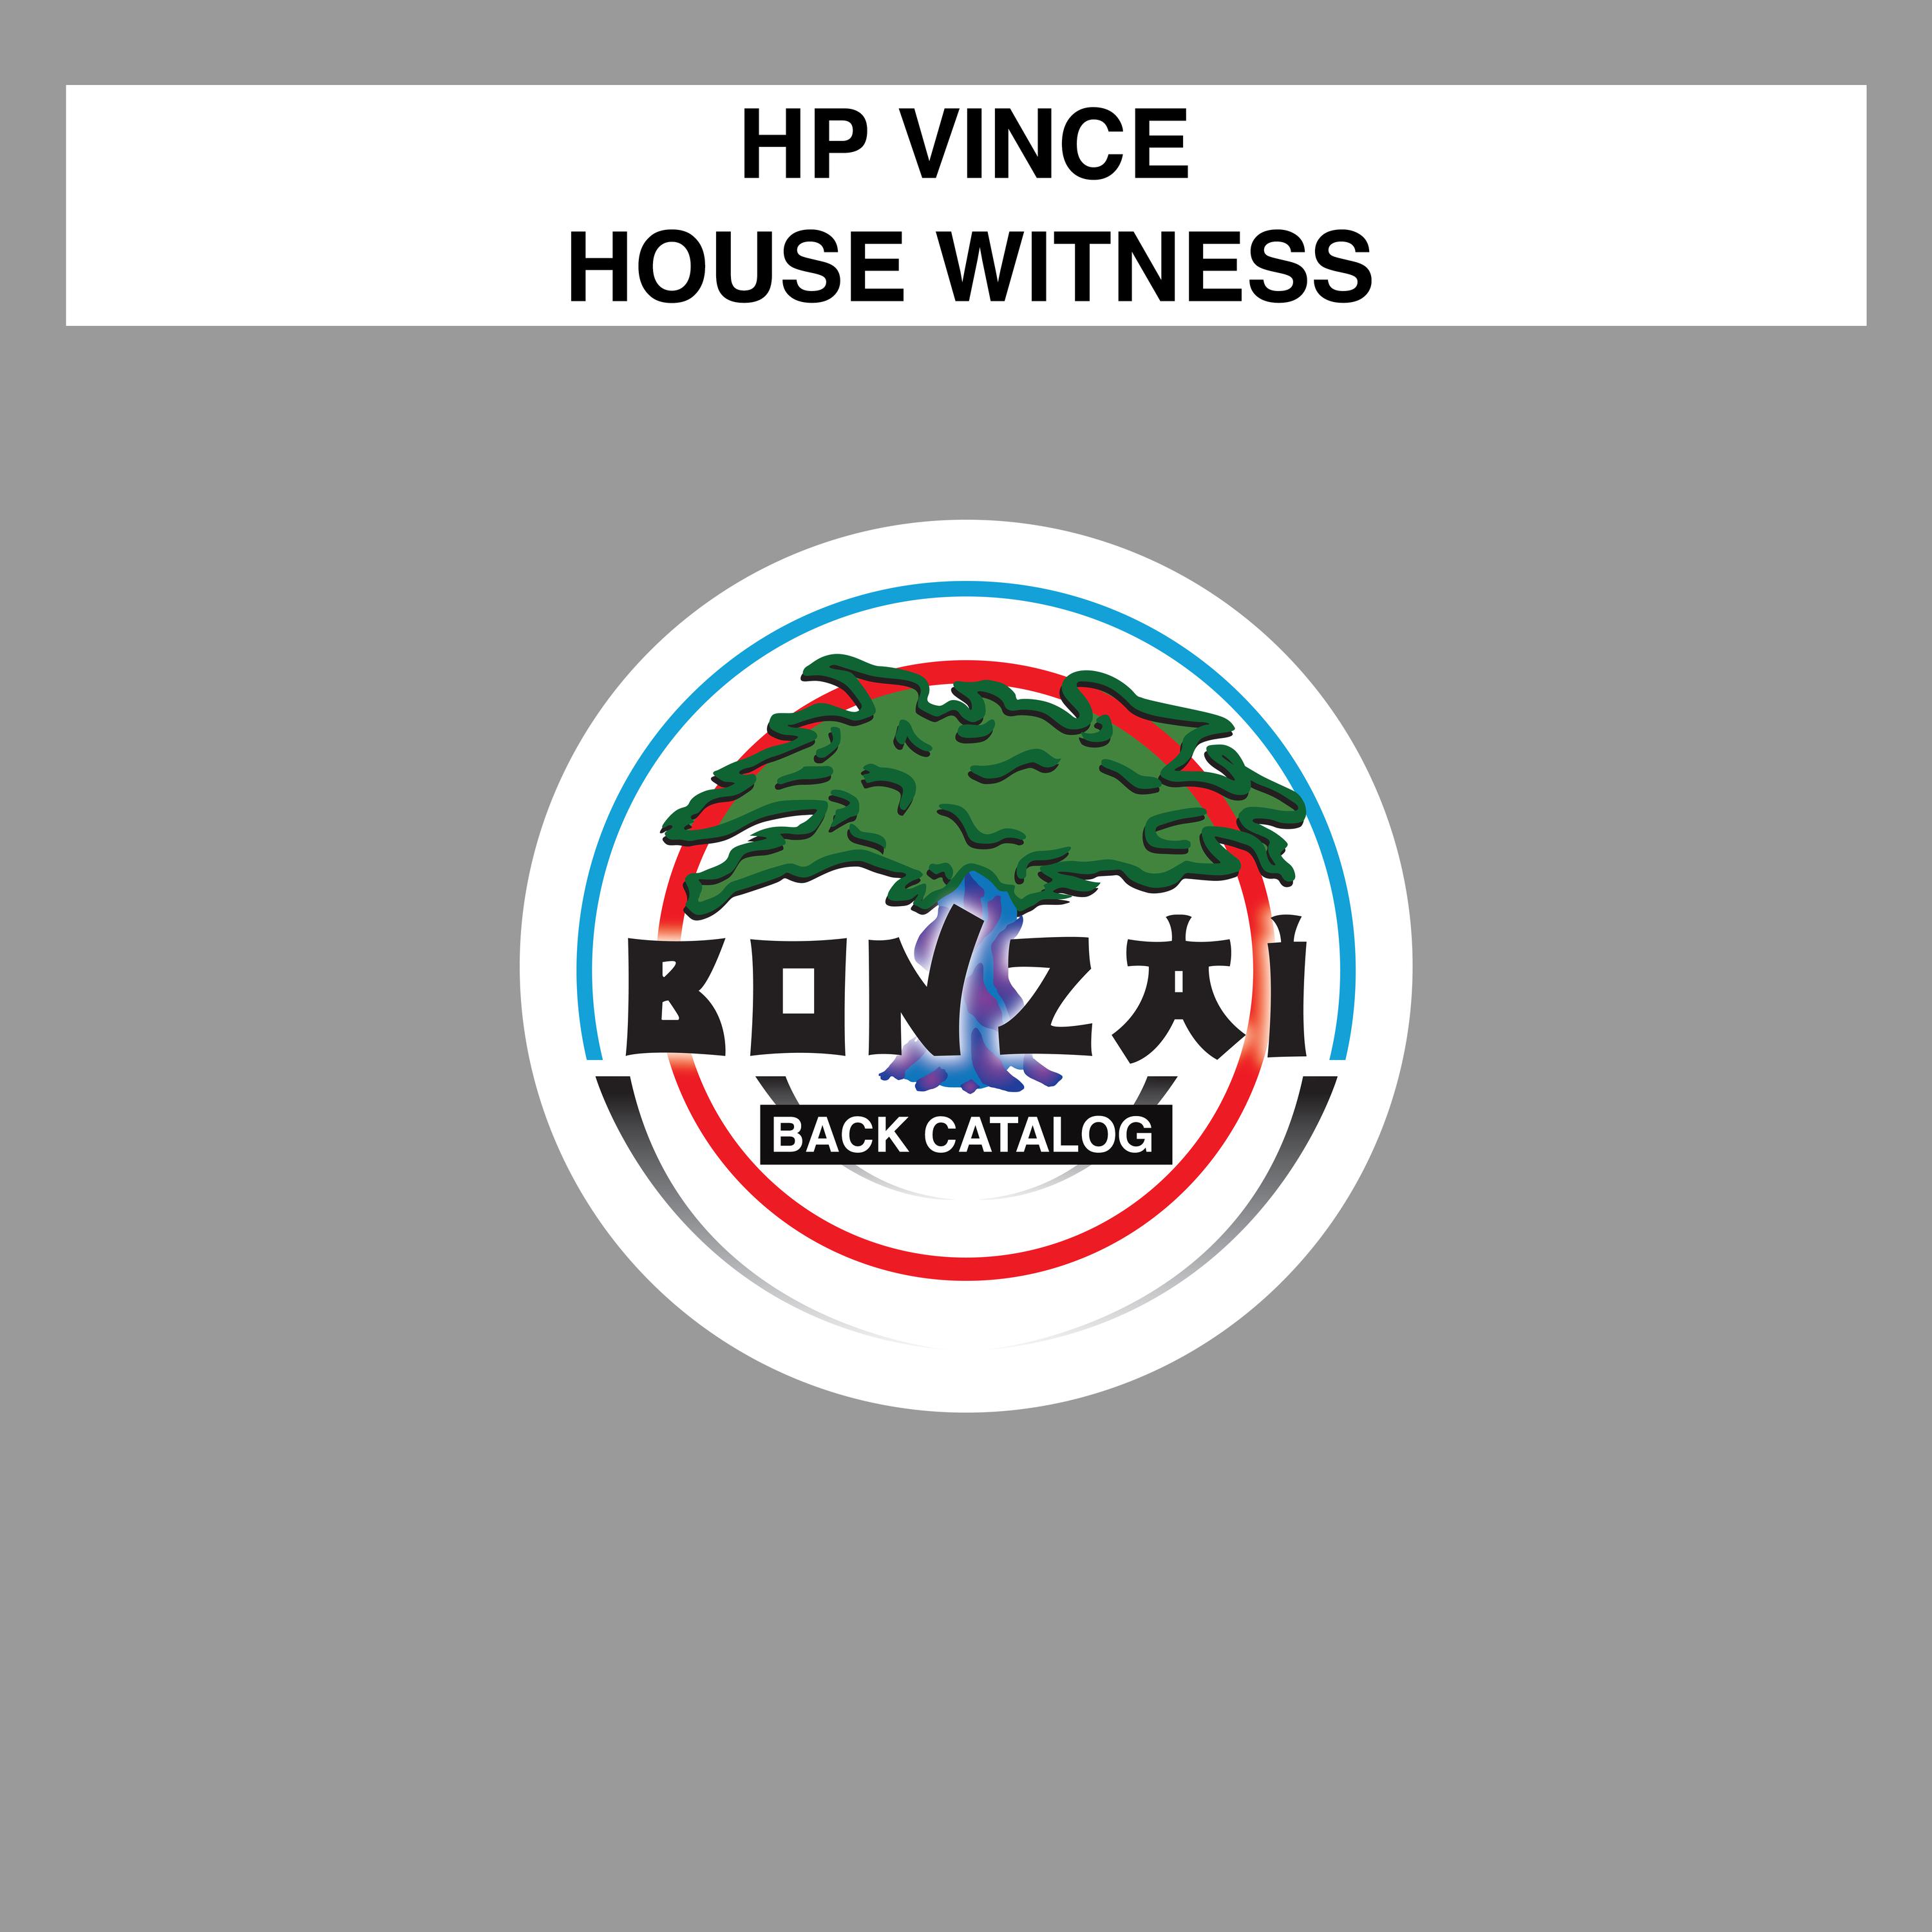 House Witness